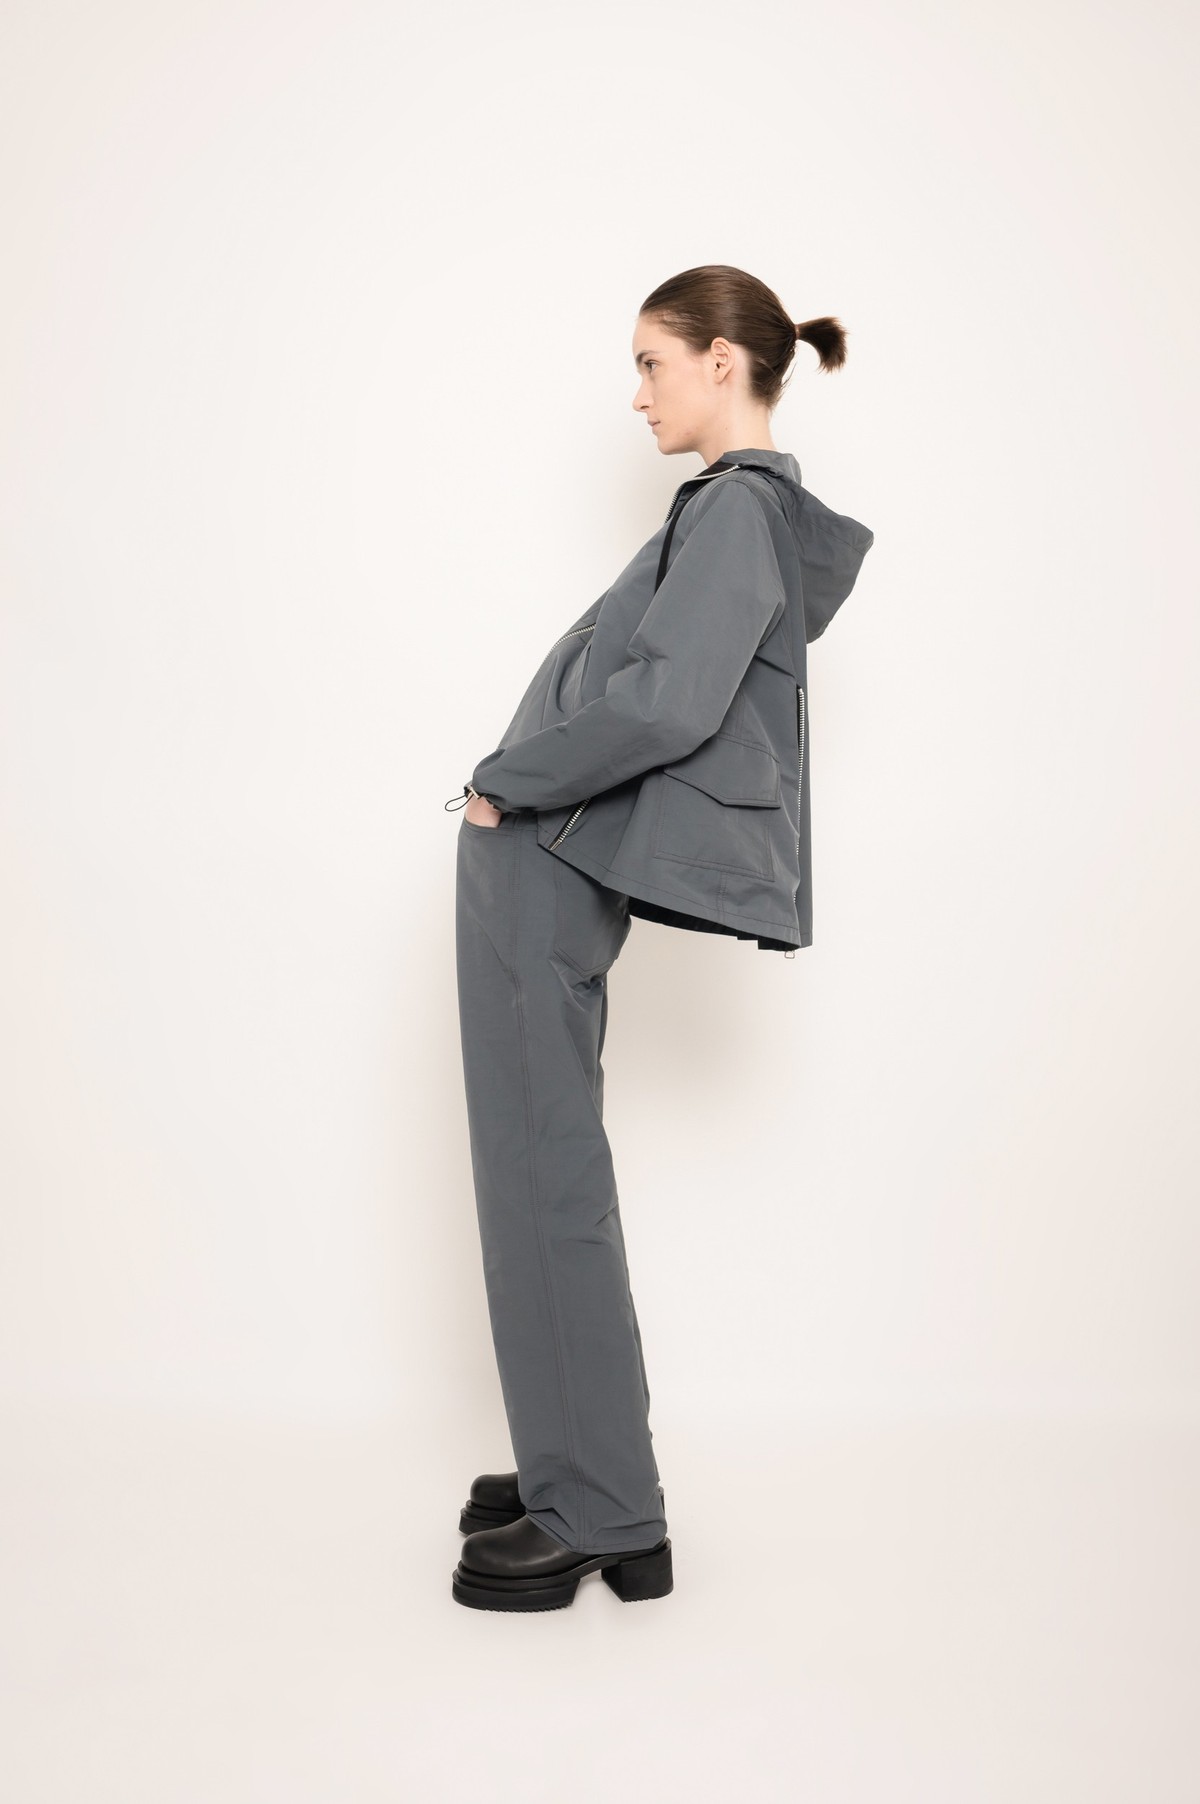 jaqueta esportiva versátil com ziperes | tech fabric versatile jacket with zippers 